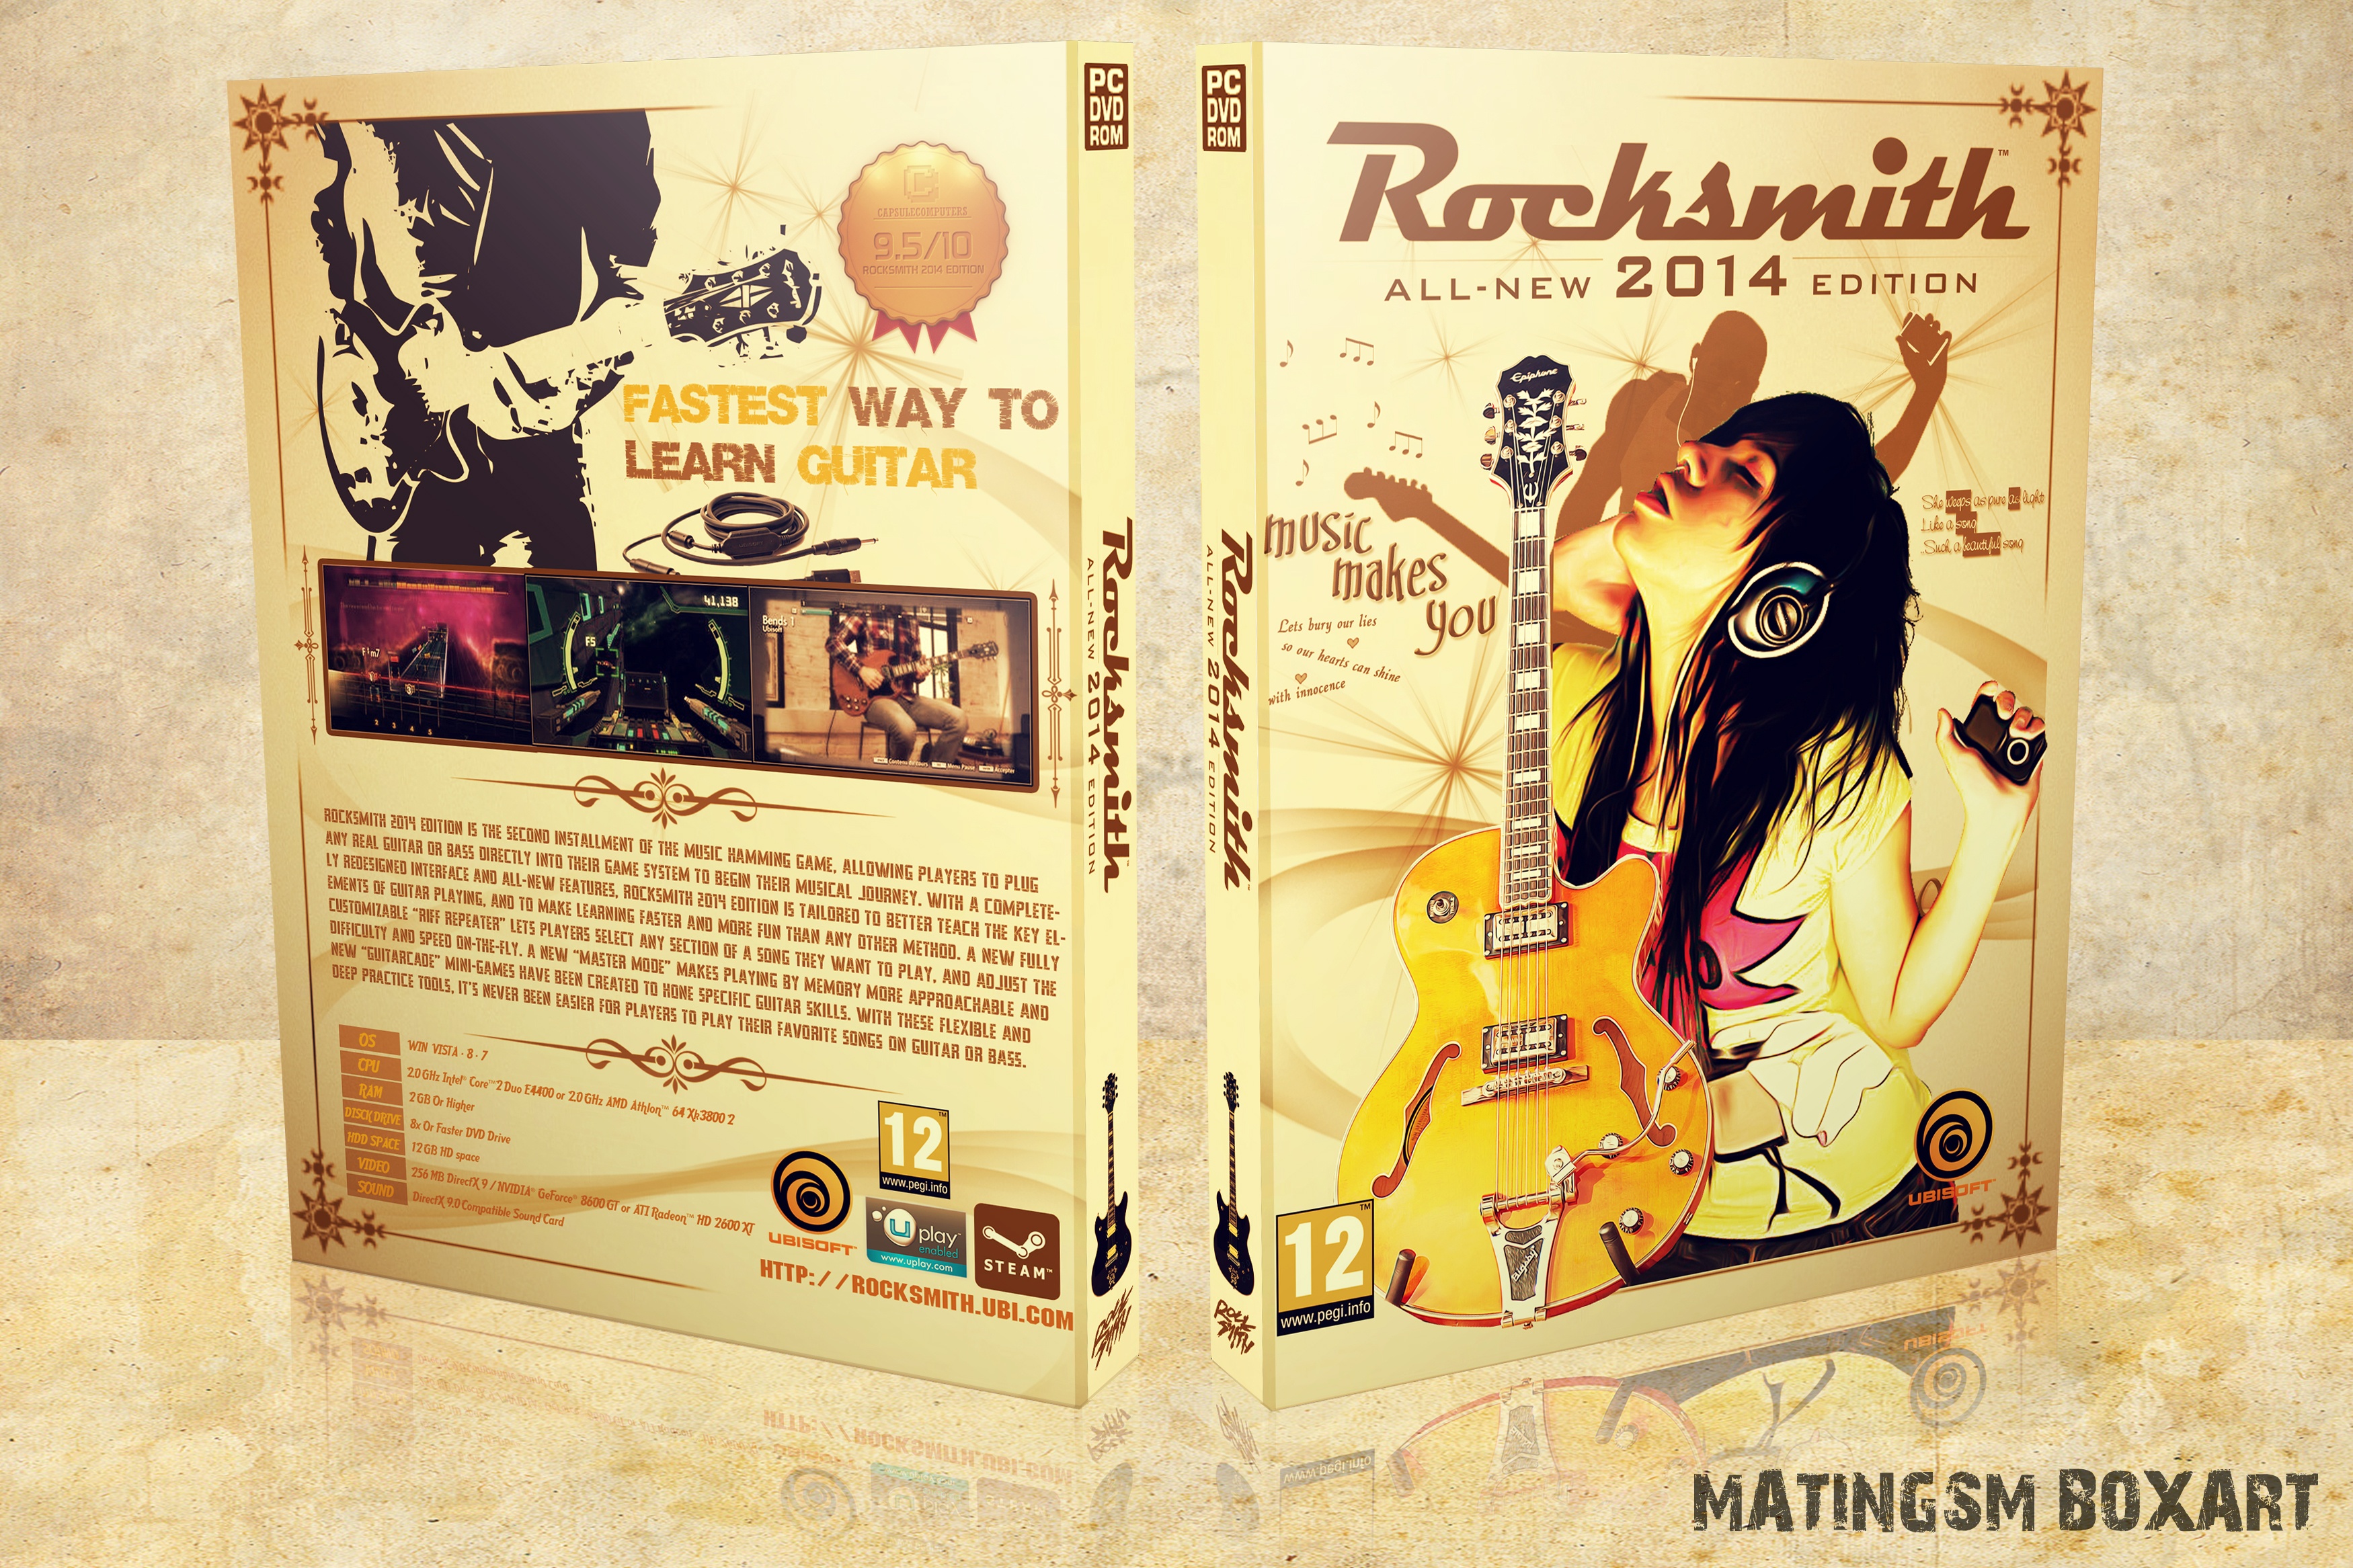 Rocksmith 2014 Edition box cover